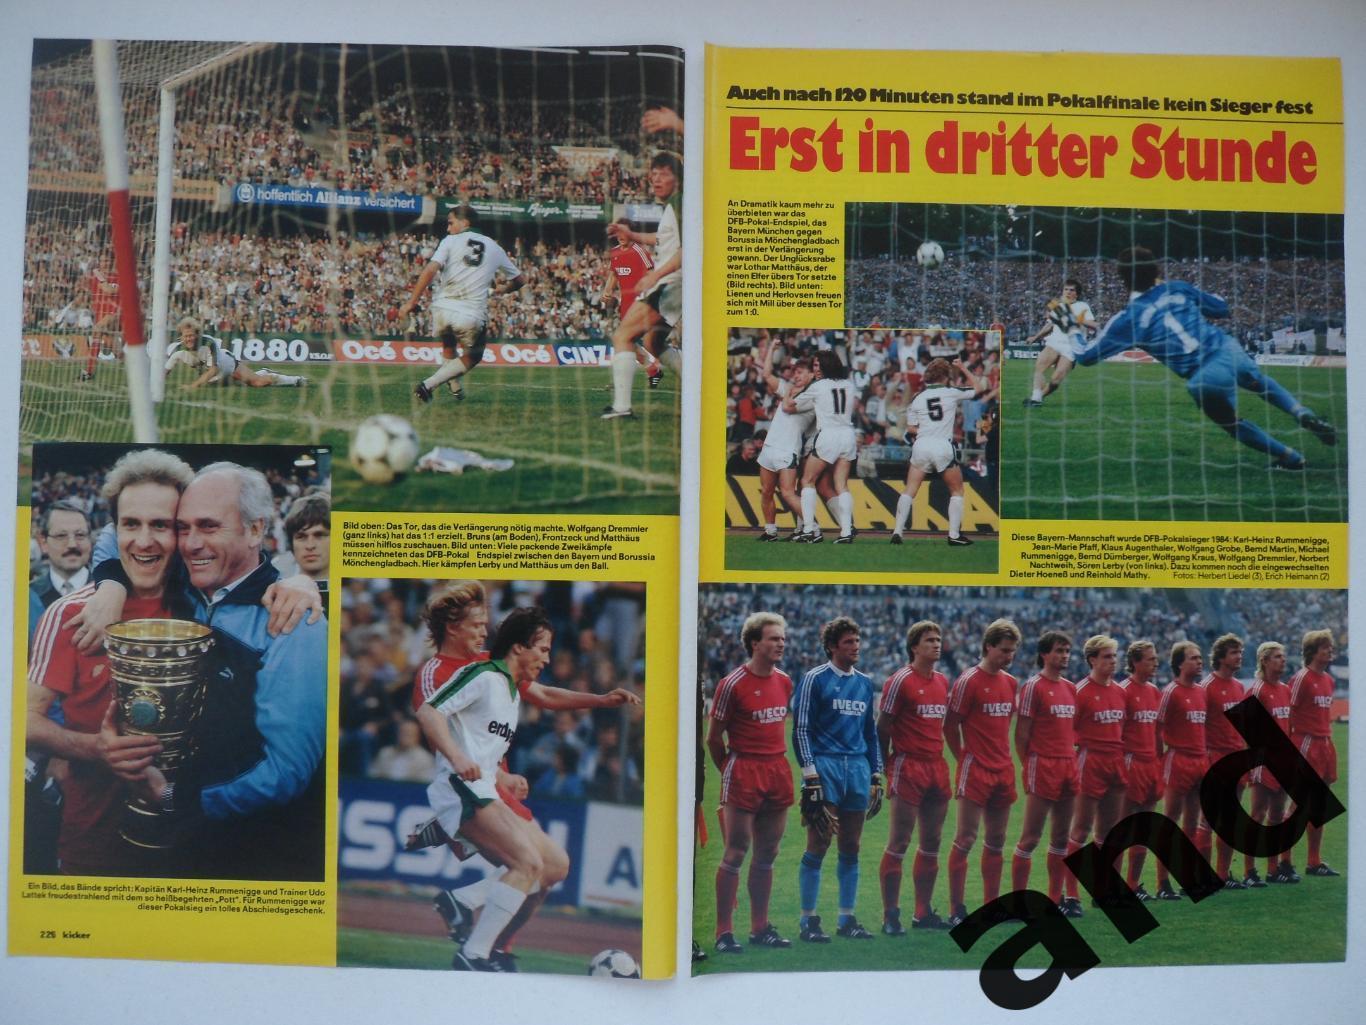 Бавария - обладатель кубка ФРГ 1984